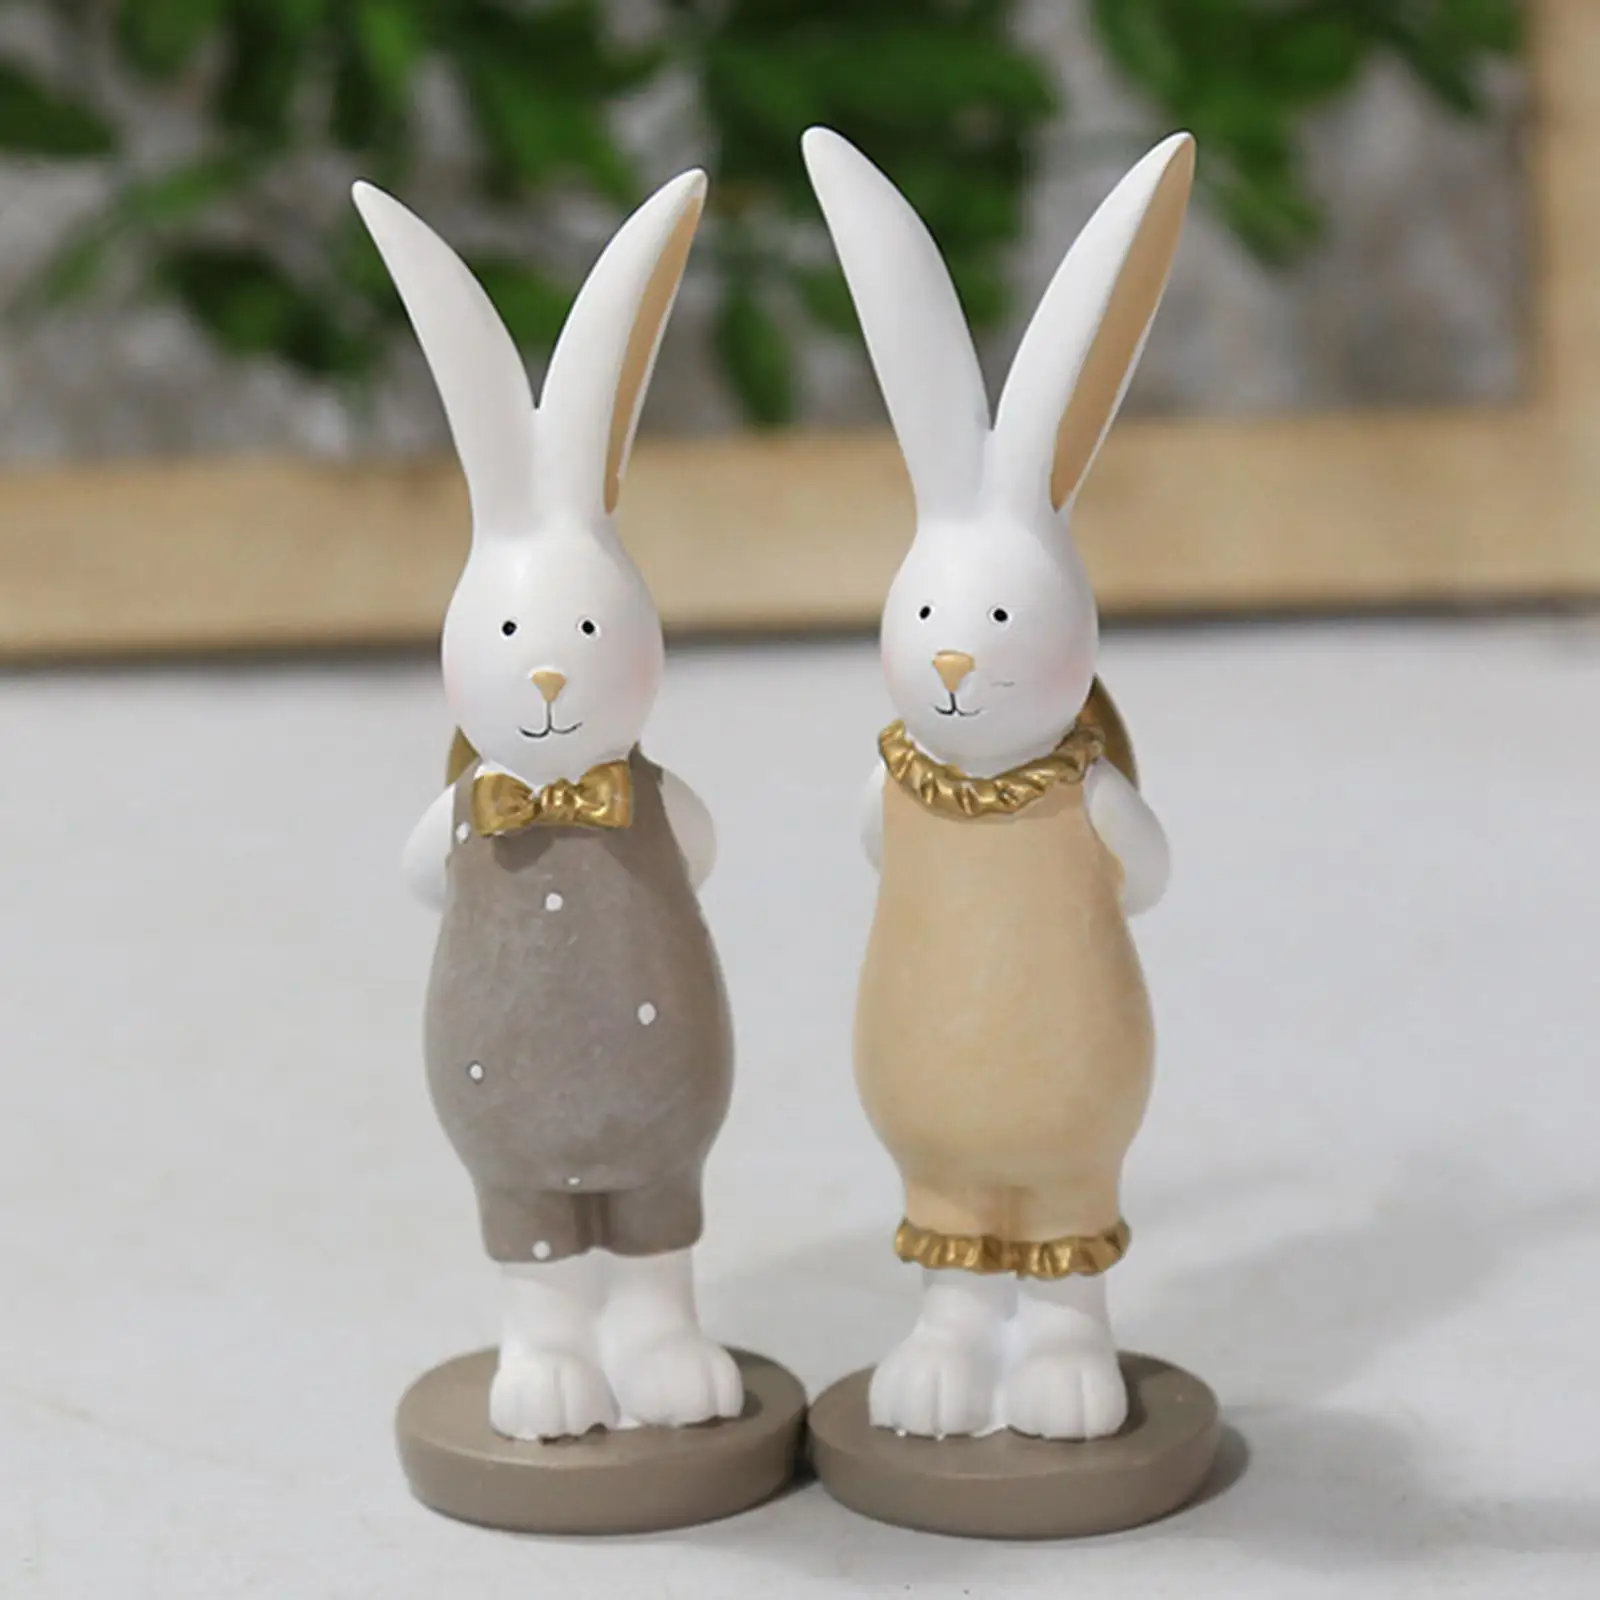 2x Rabbit Statue Little Figure Easter Bunny Figurine for Car Dashboard Decor